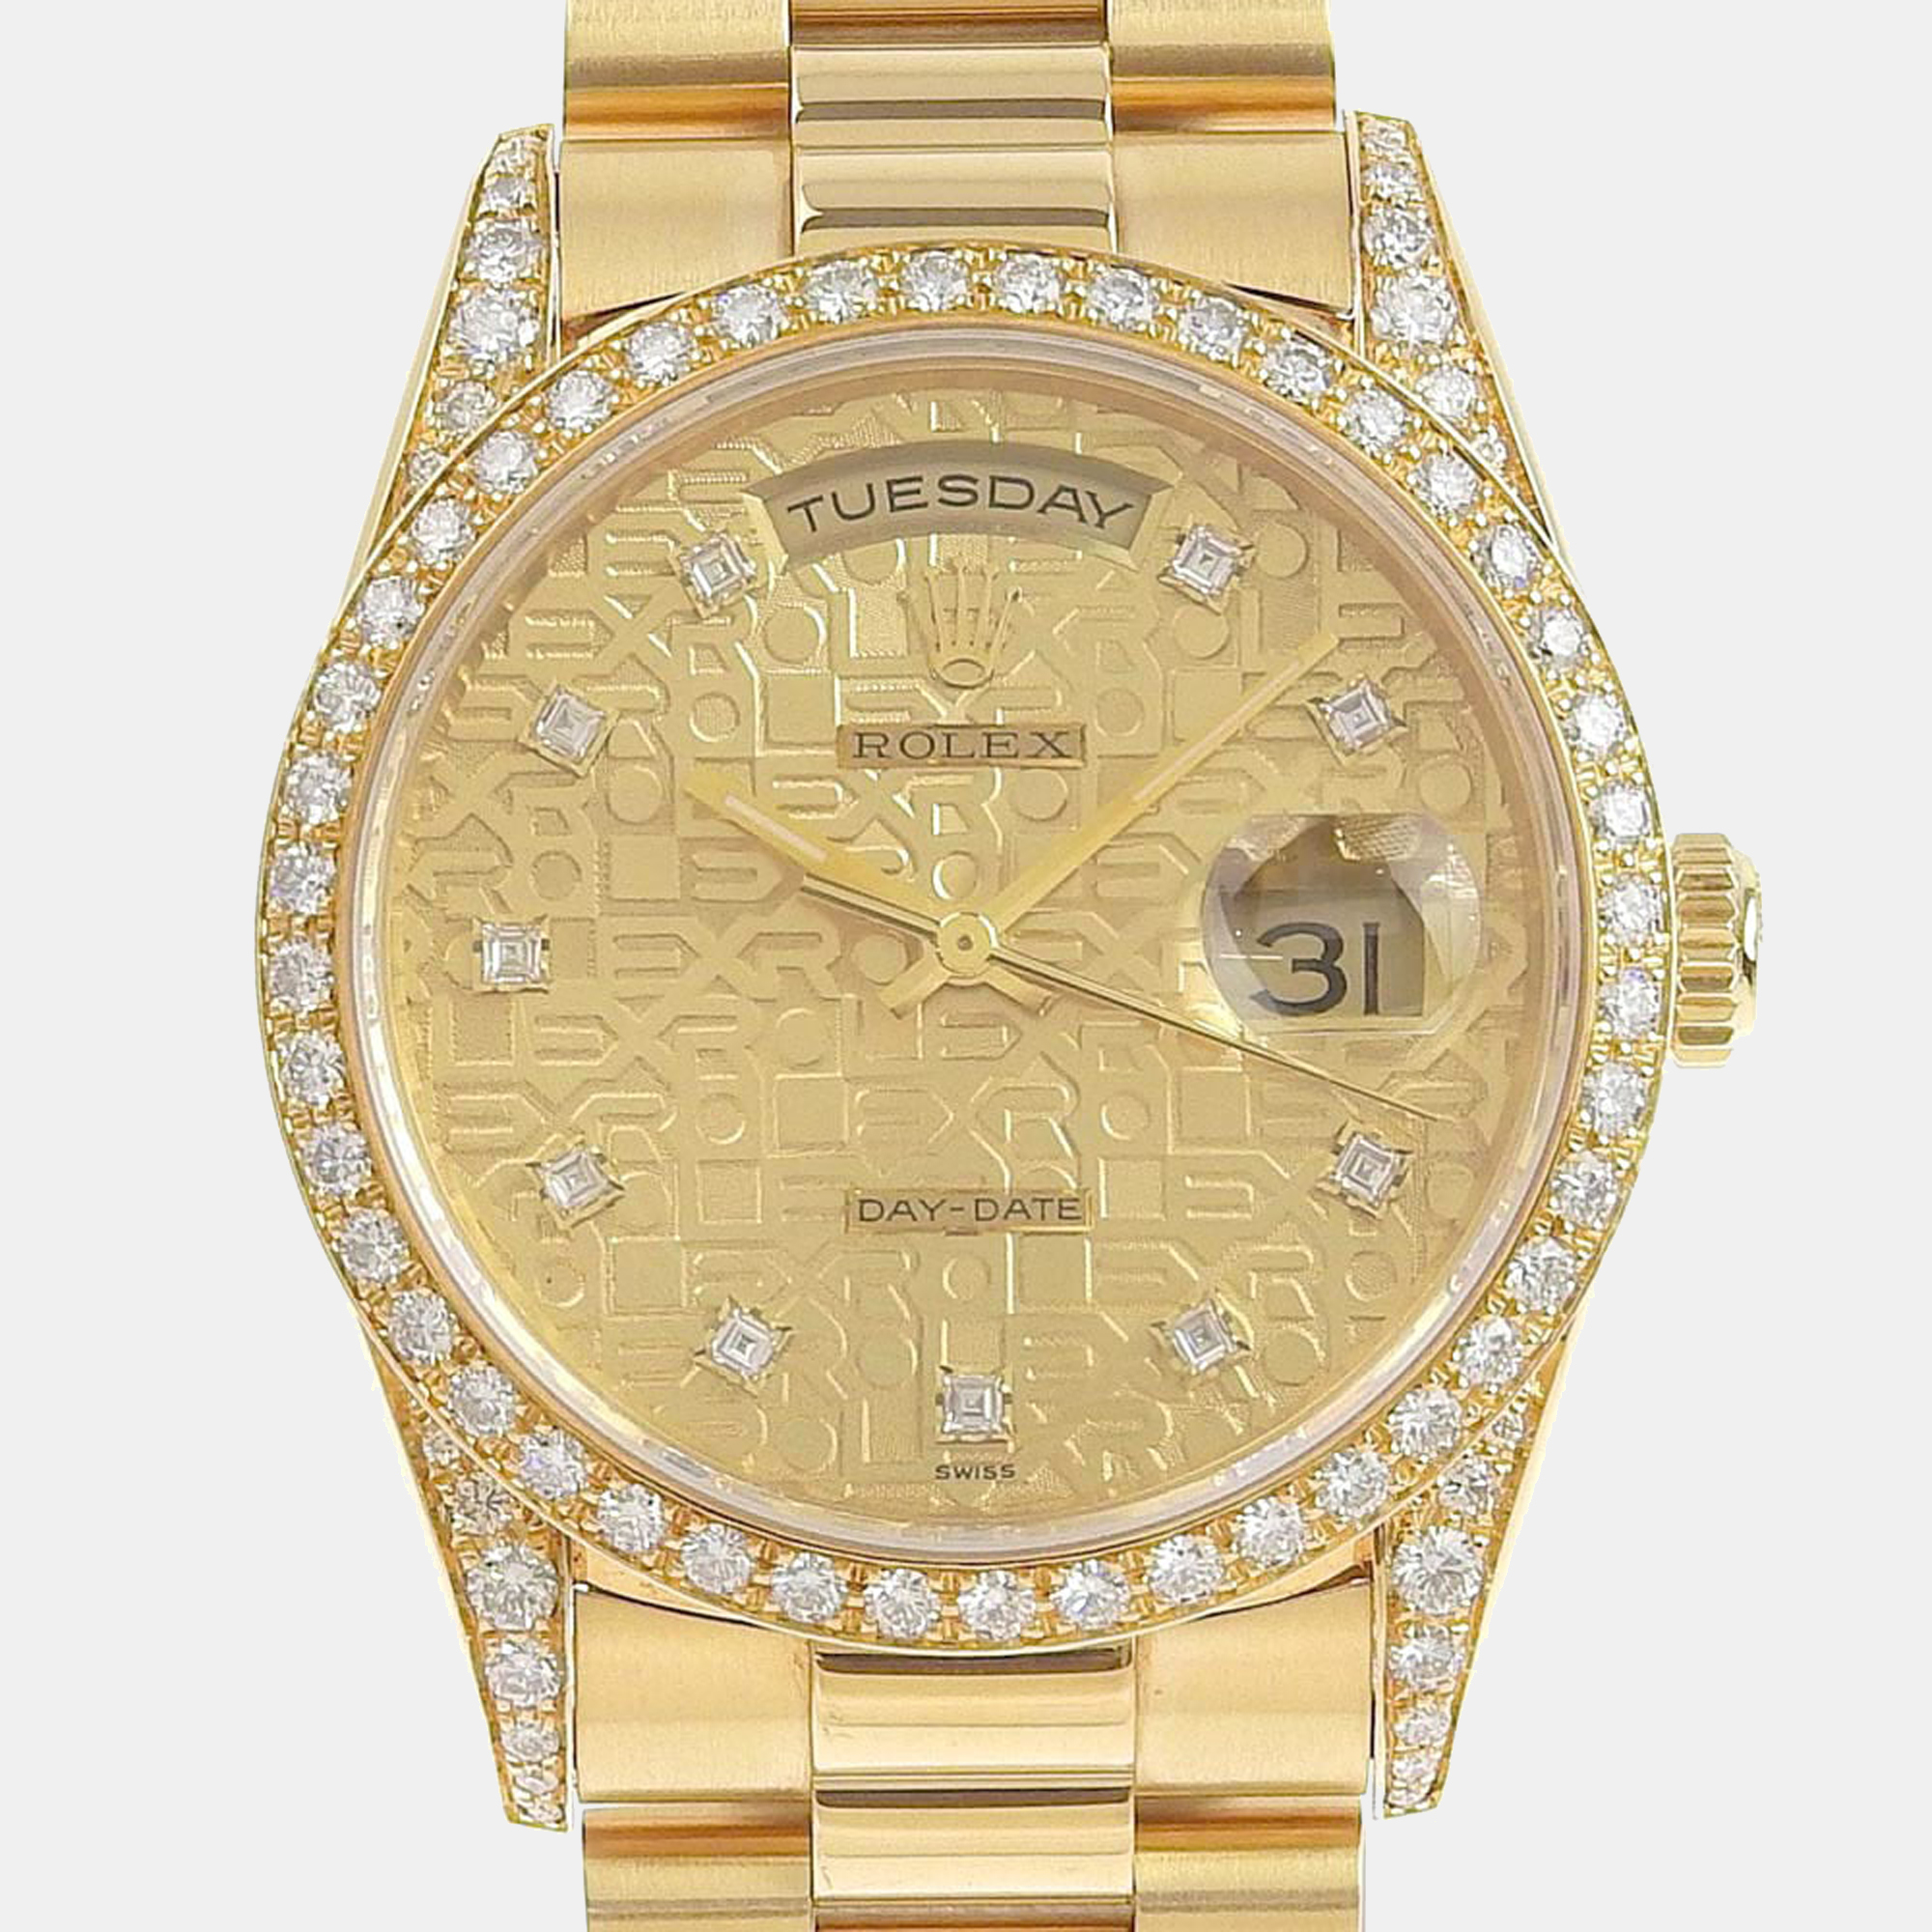 Rolex champagne diamonds 18k yellow gold day - date president 18388 men's wristwatch 36 mm